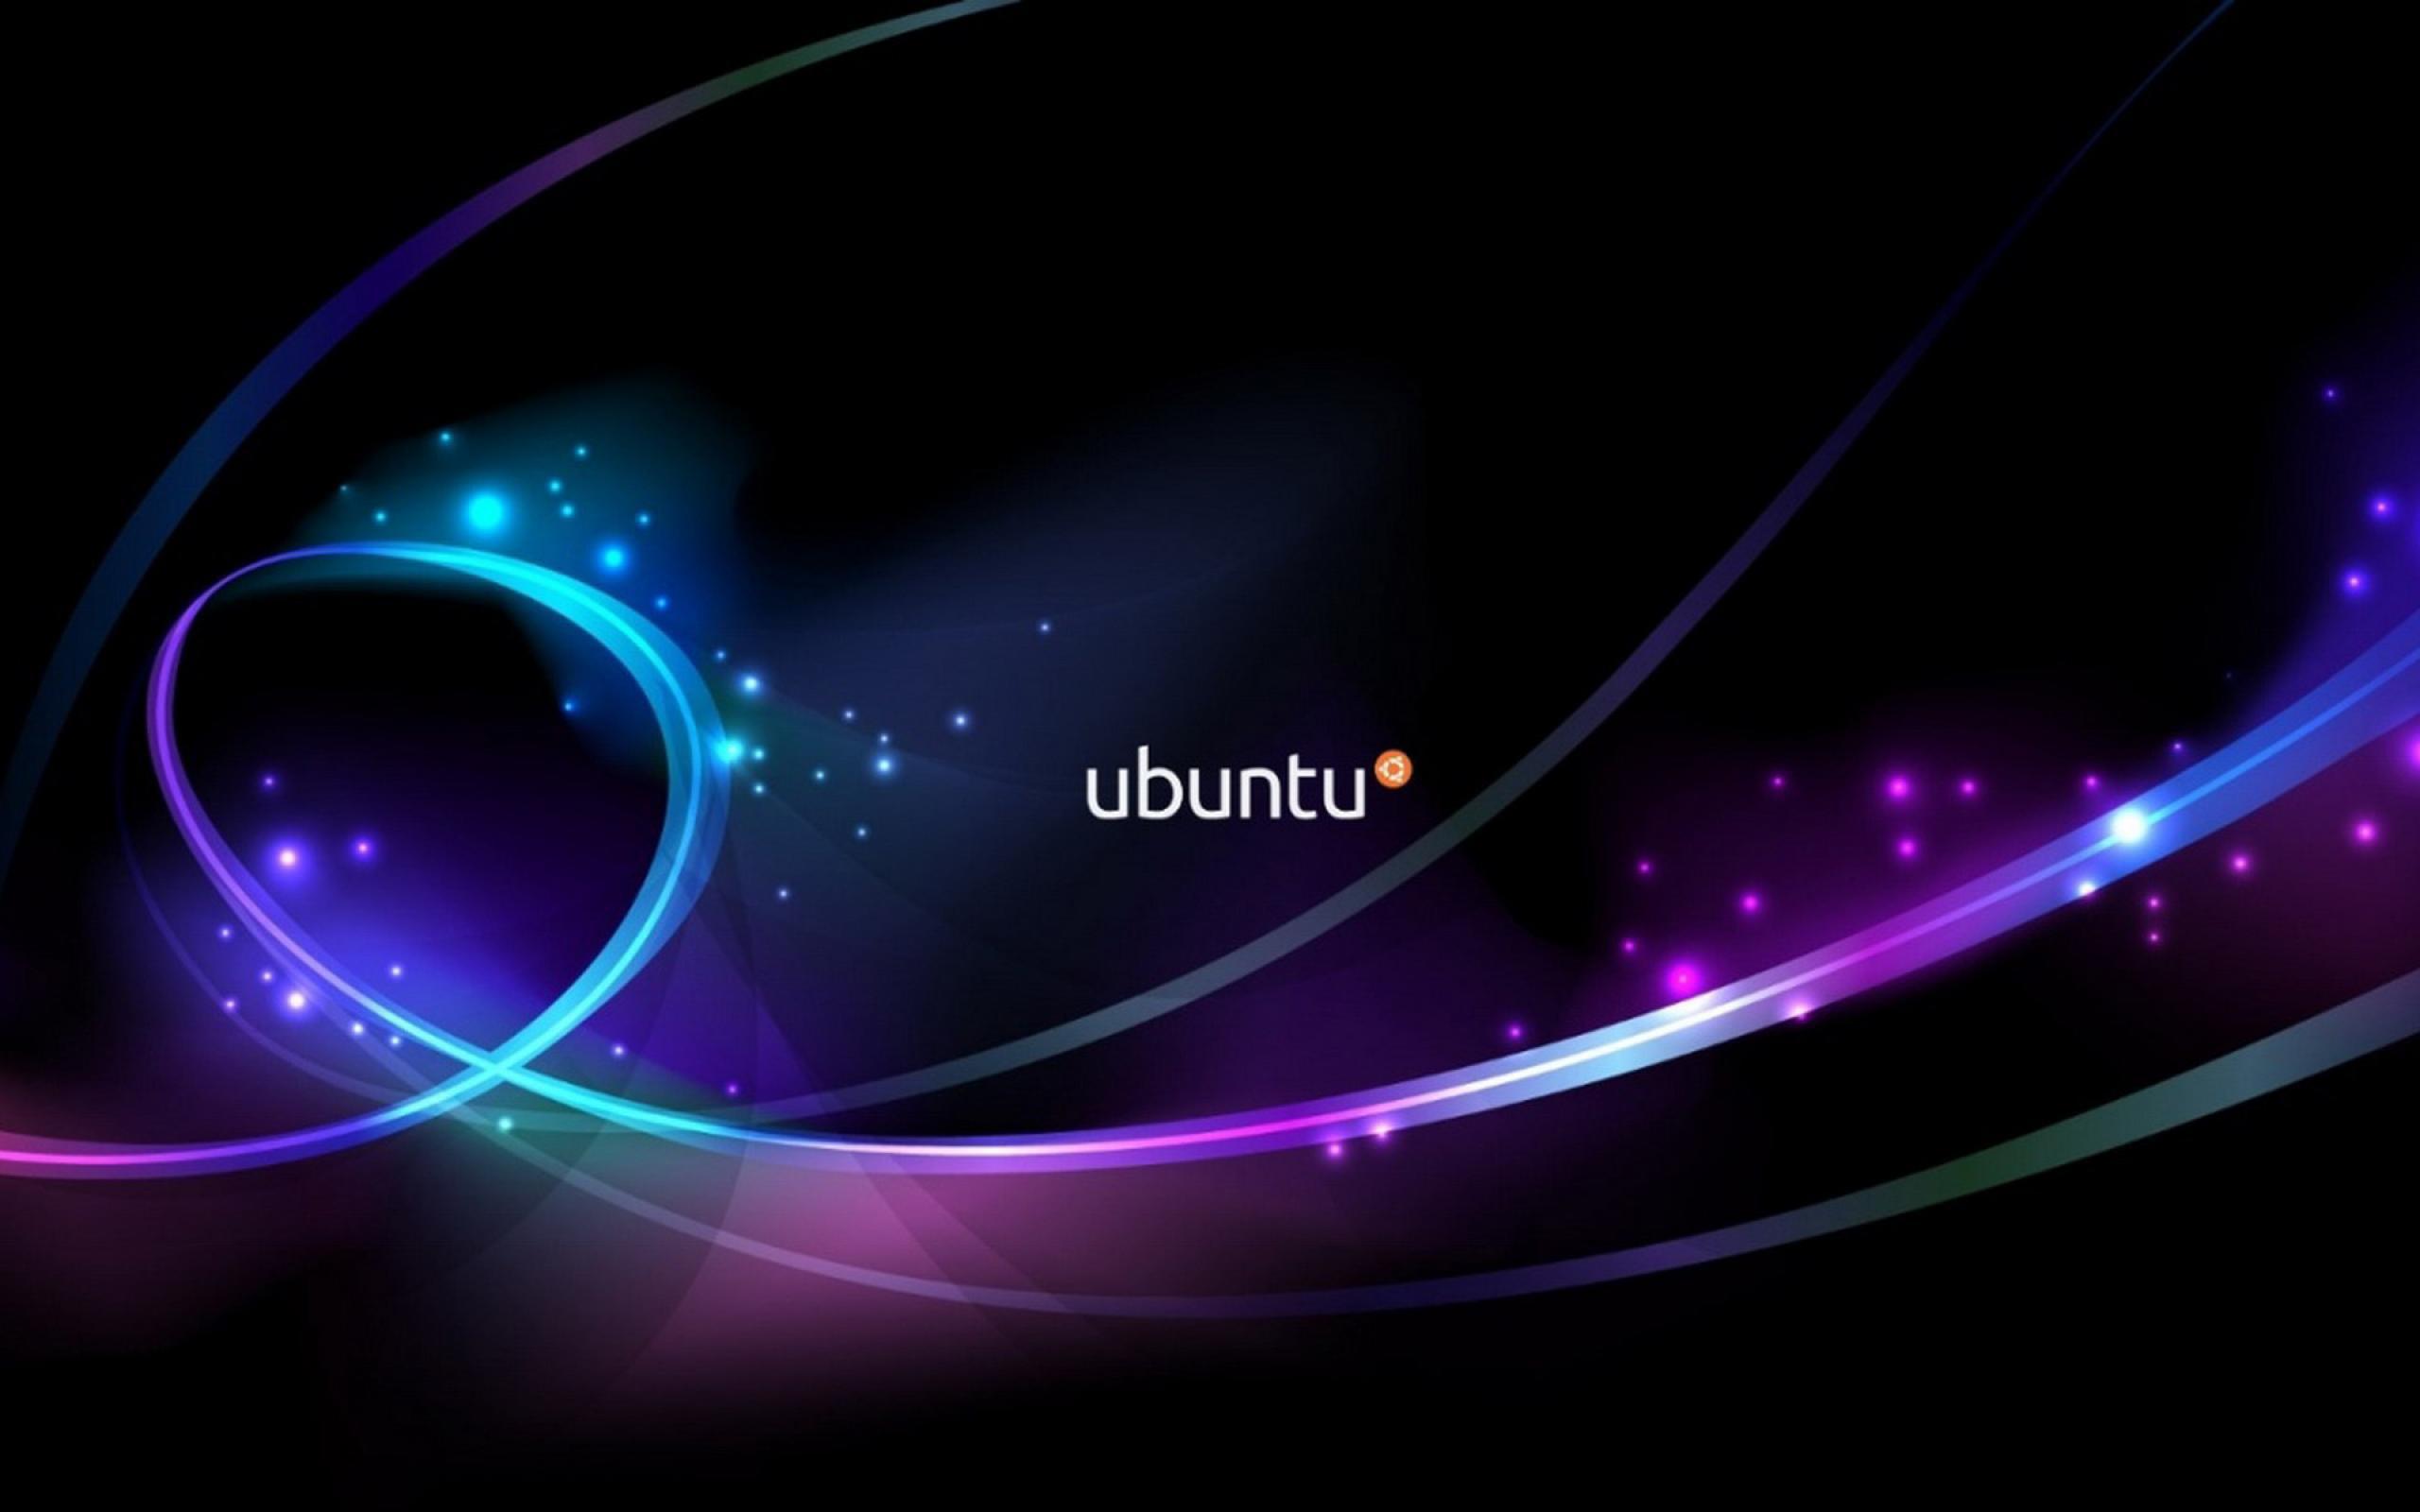 2560 x 1600 · jpeg - Ubuntu Wallpapers, Pictures, Images